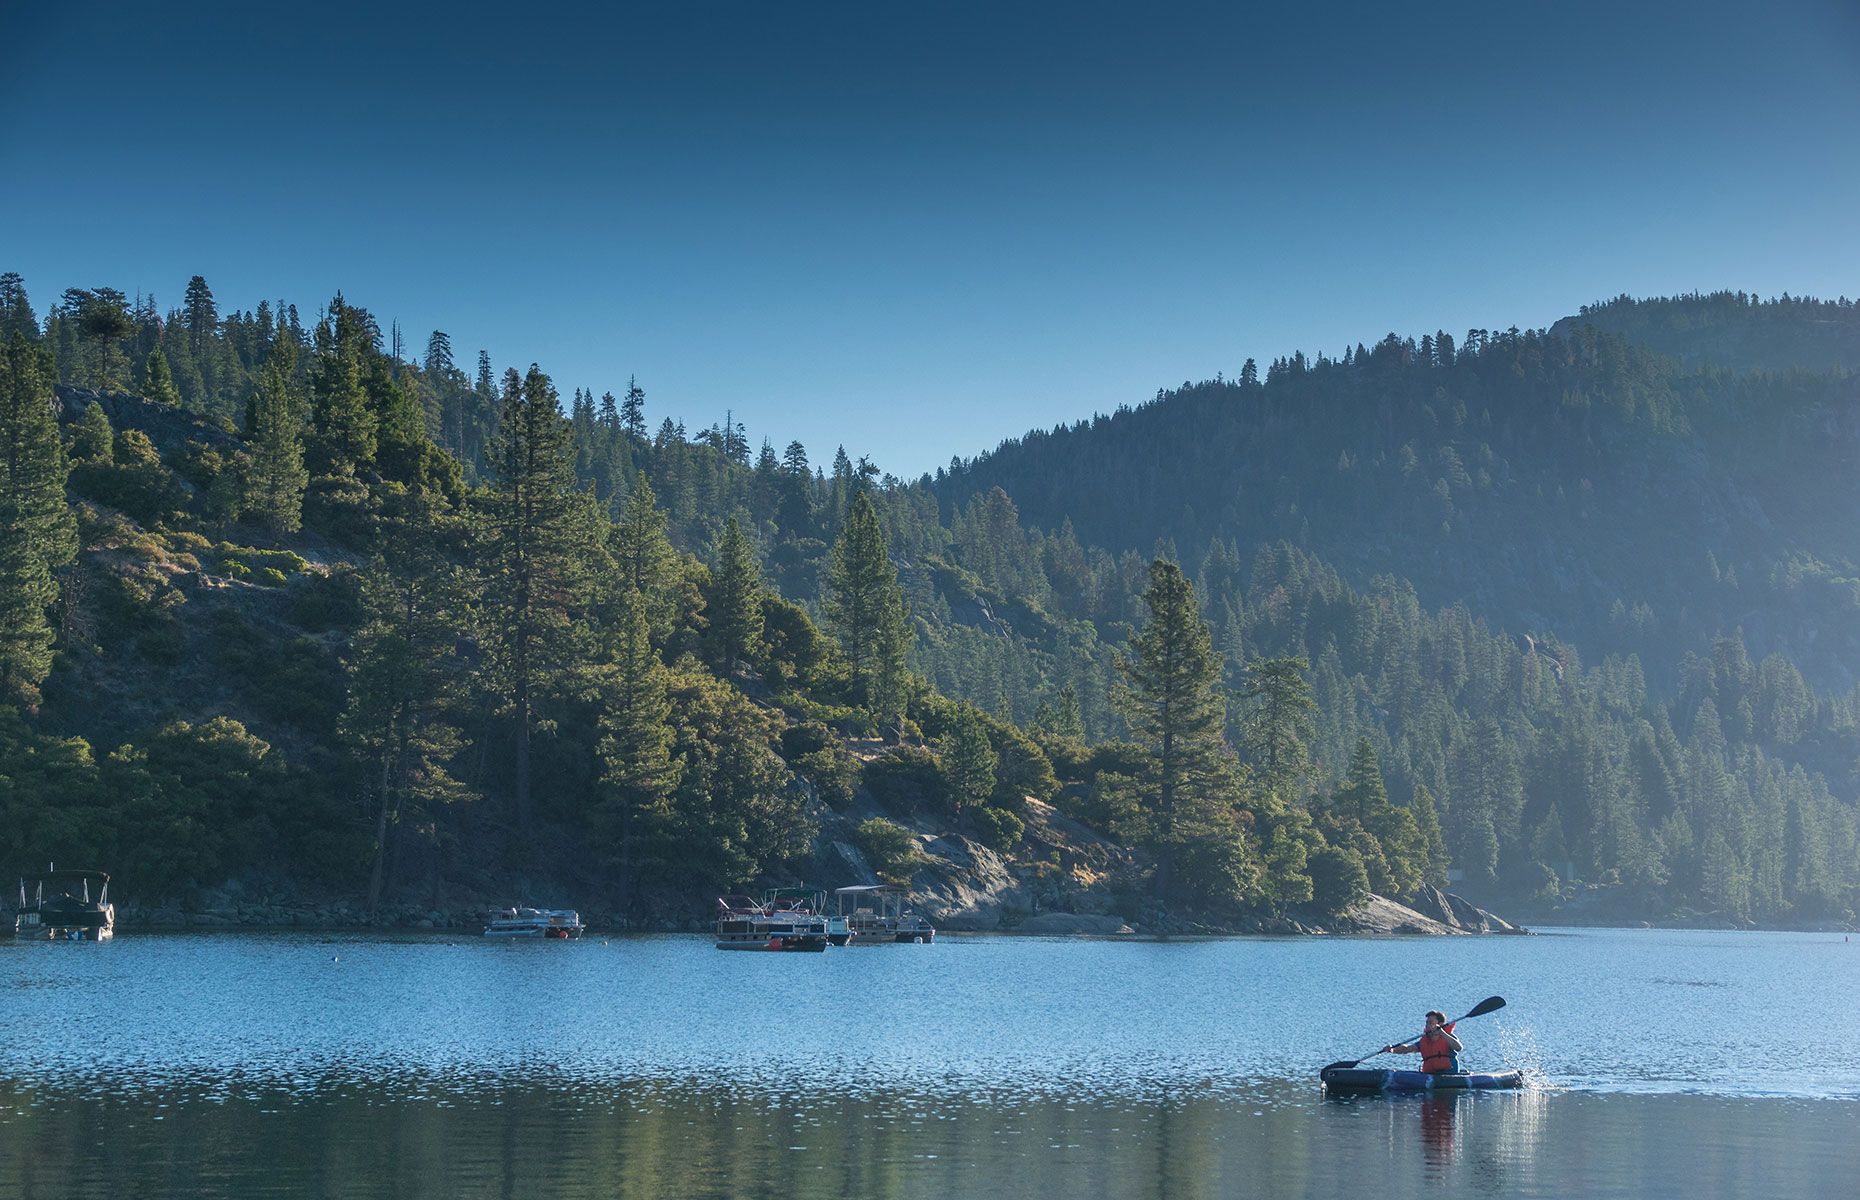 Pinrecrest Lake (Image: Courtesy of High Sierra/Visit Yuolumne County)